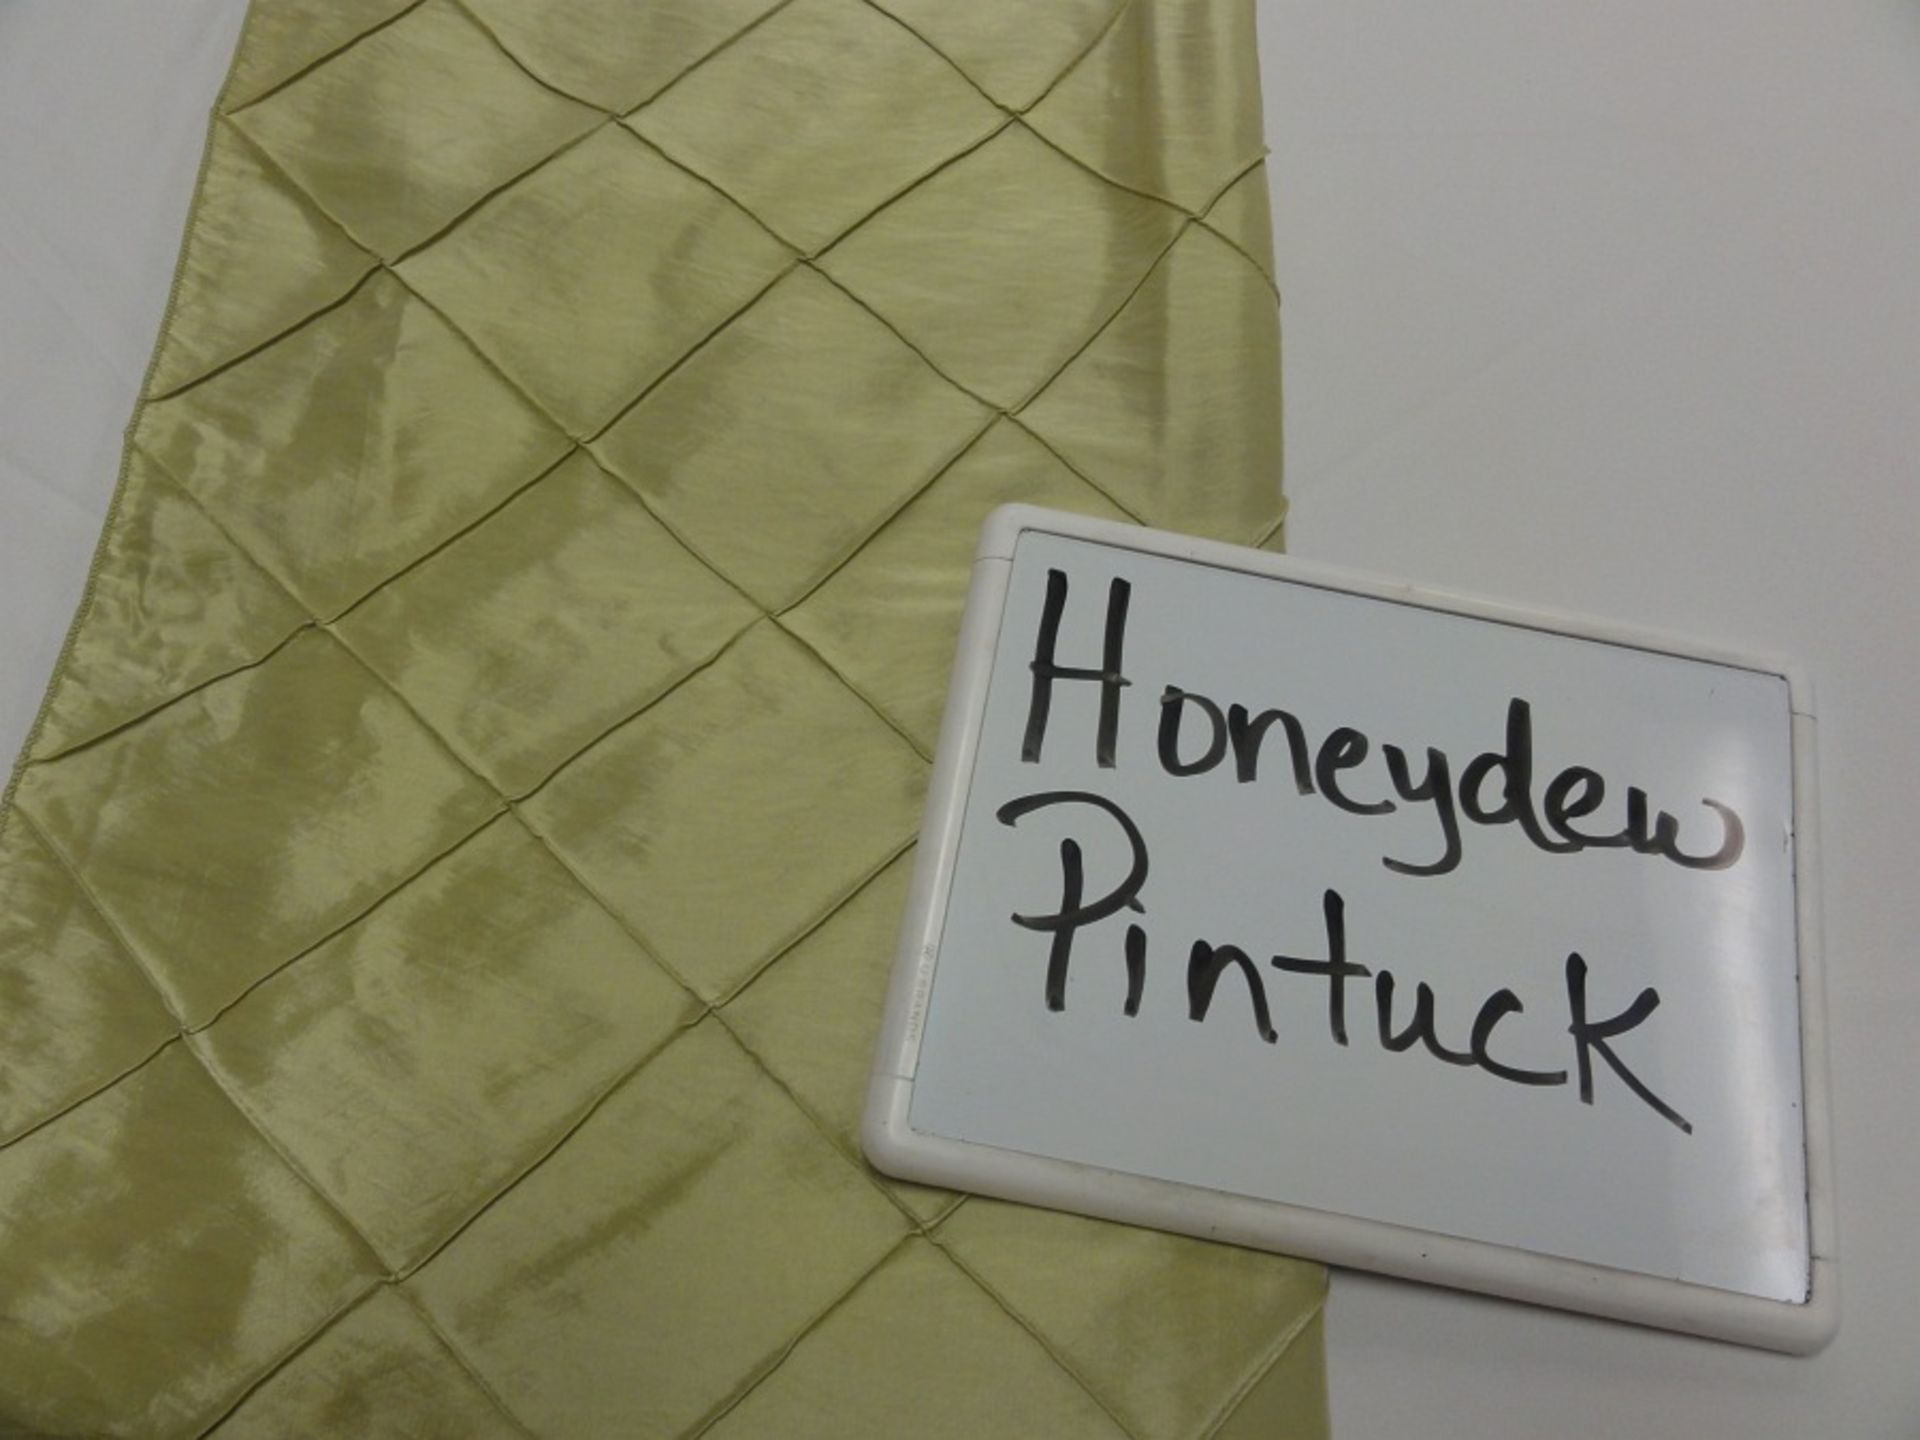 Honey Dew Pintuck (Bombay) 85x85